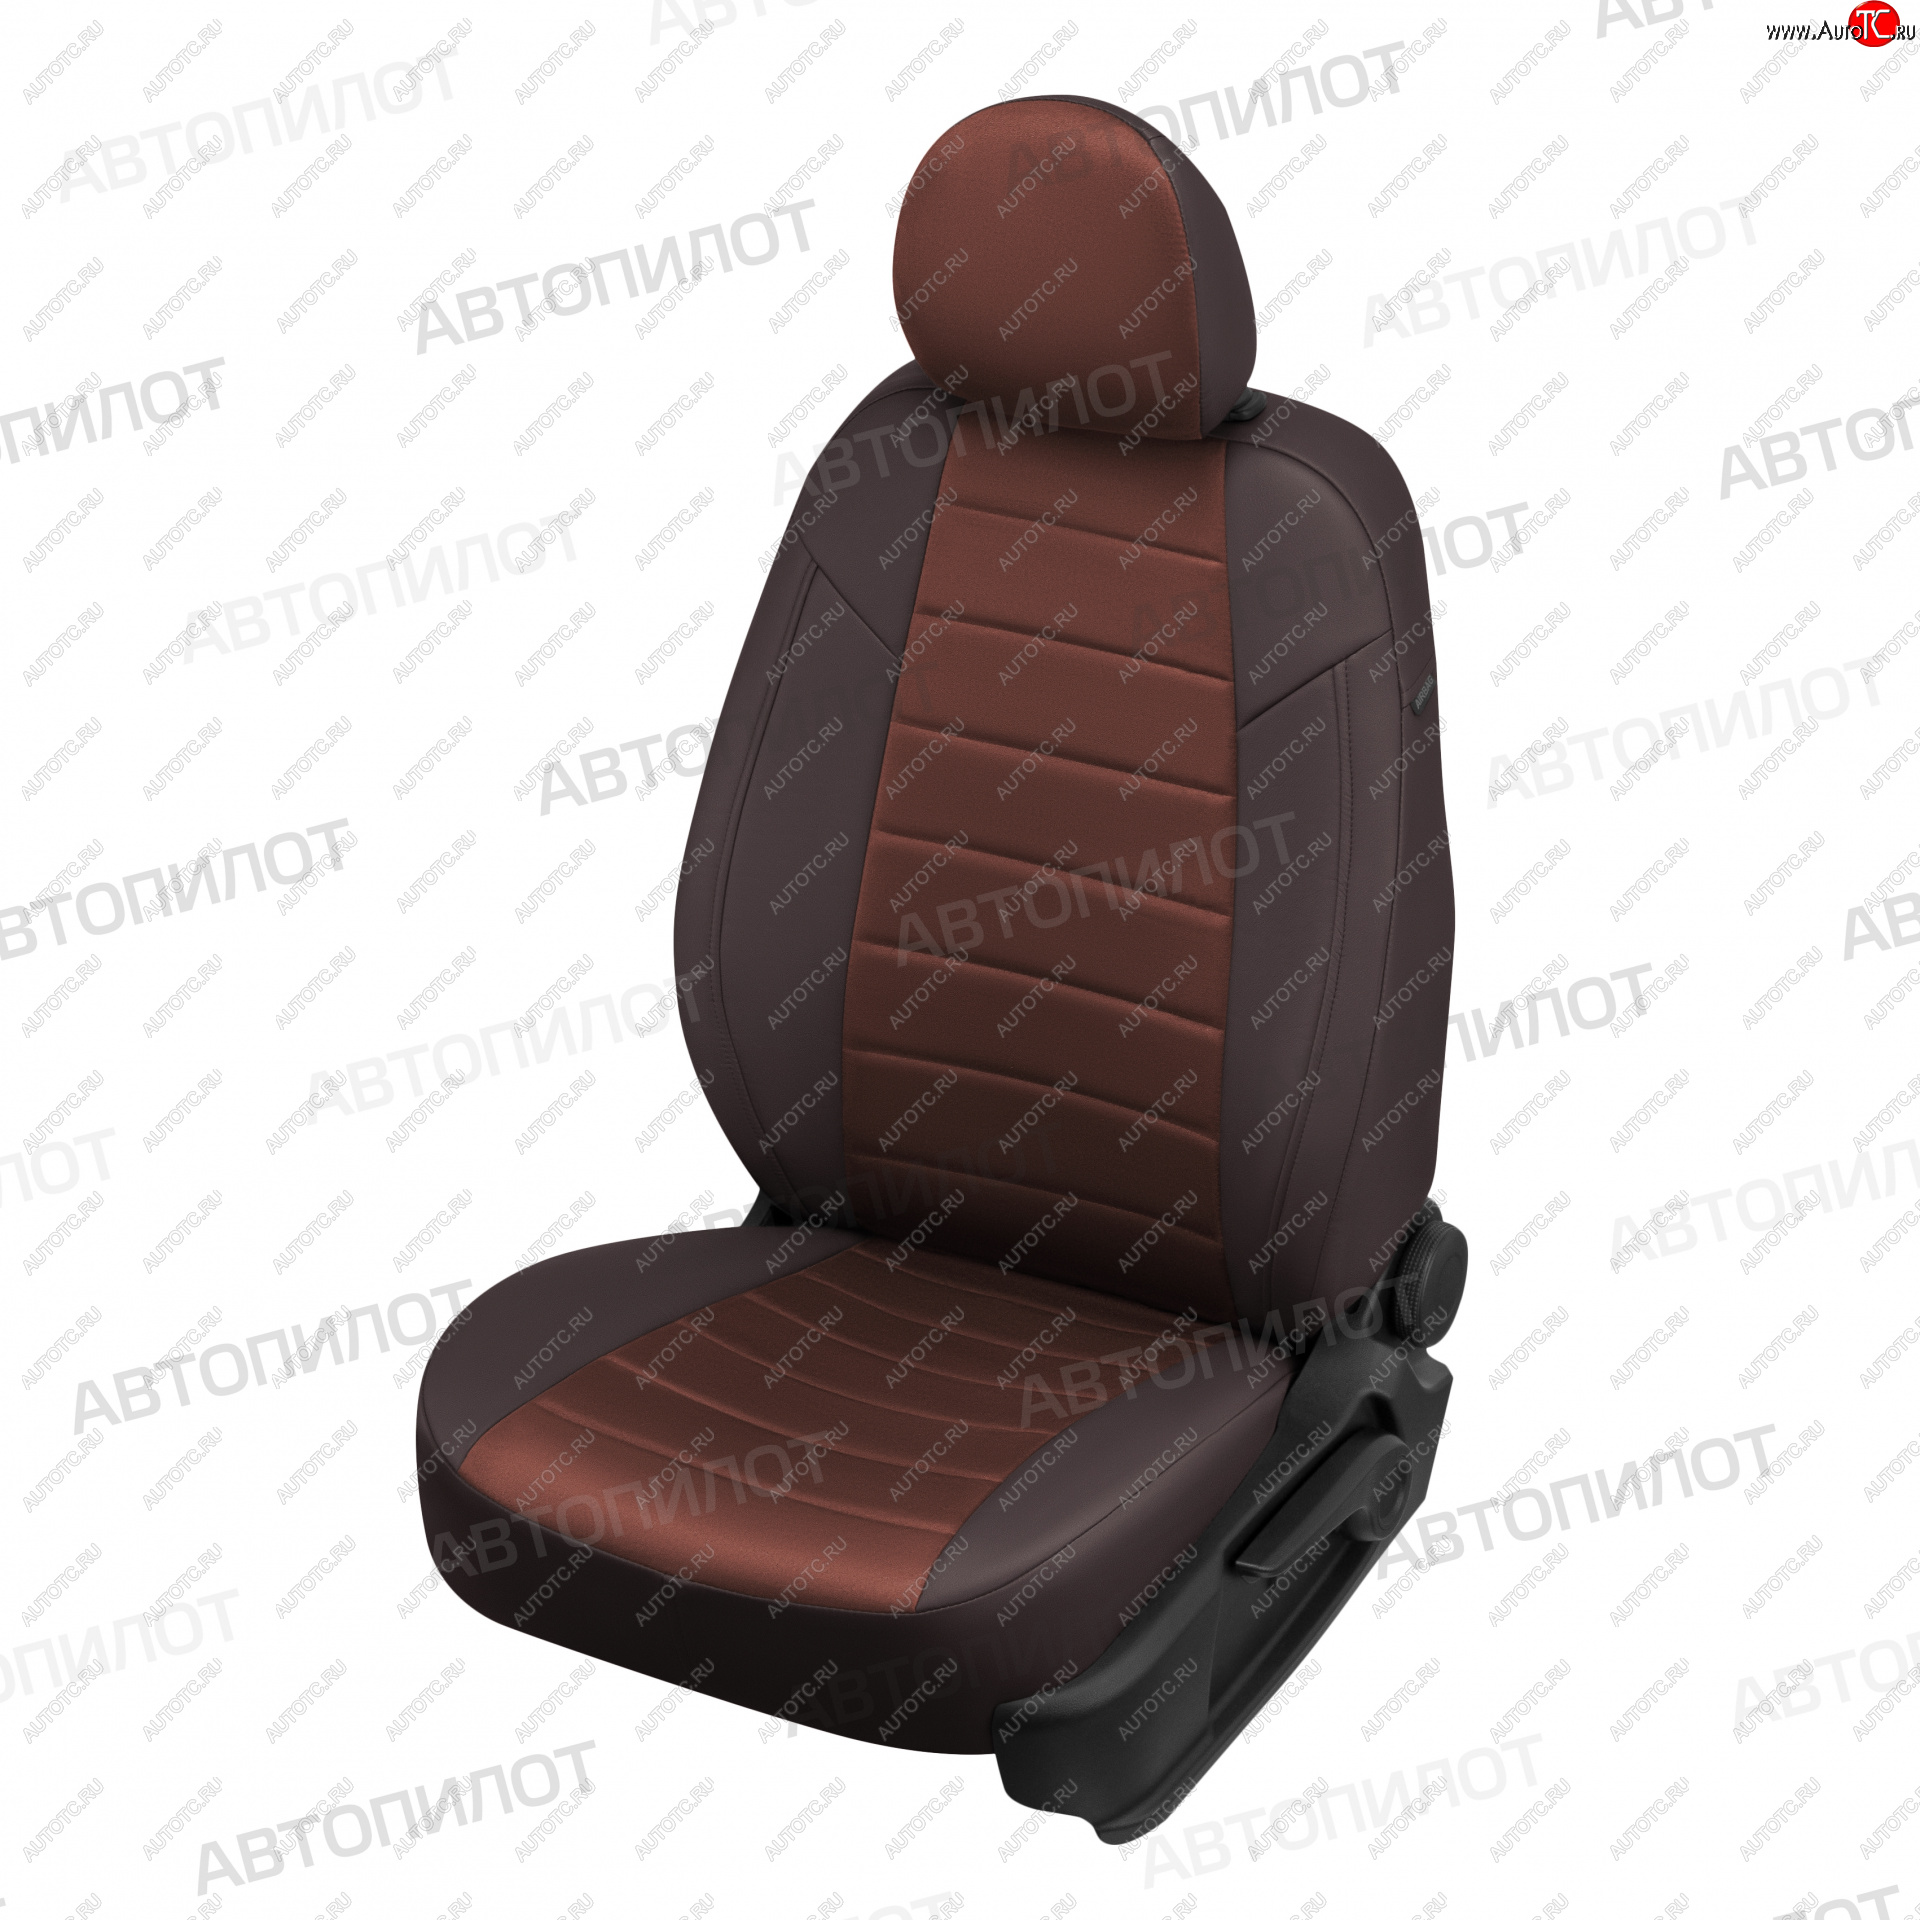 13 449 р. Чехлы сидений (экокожа/алькантара) Автопилот  Hyundai i20  1 PB (2008-2015) (шоколад)